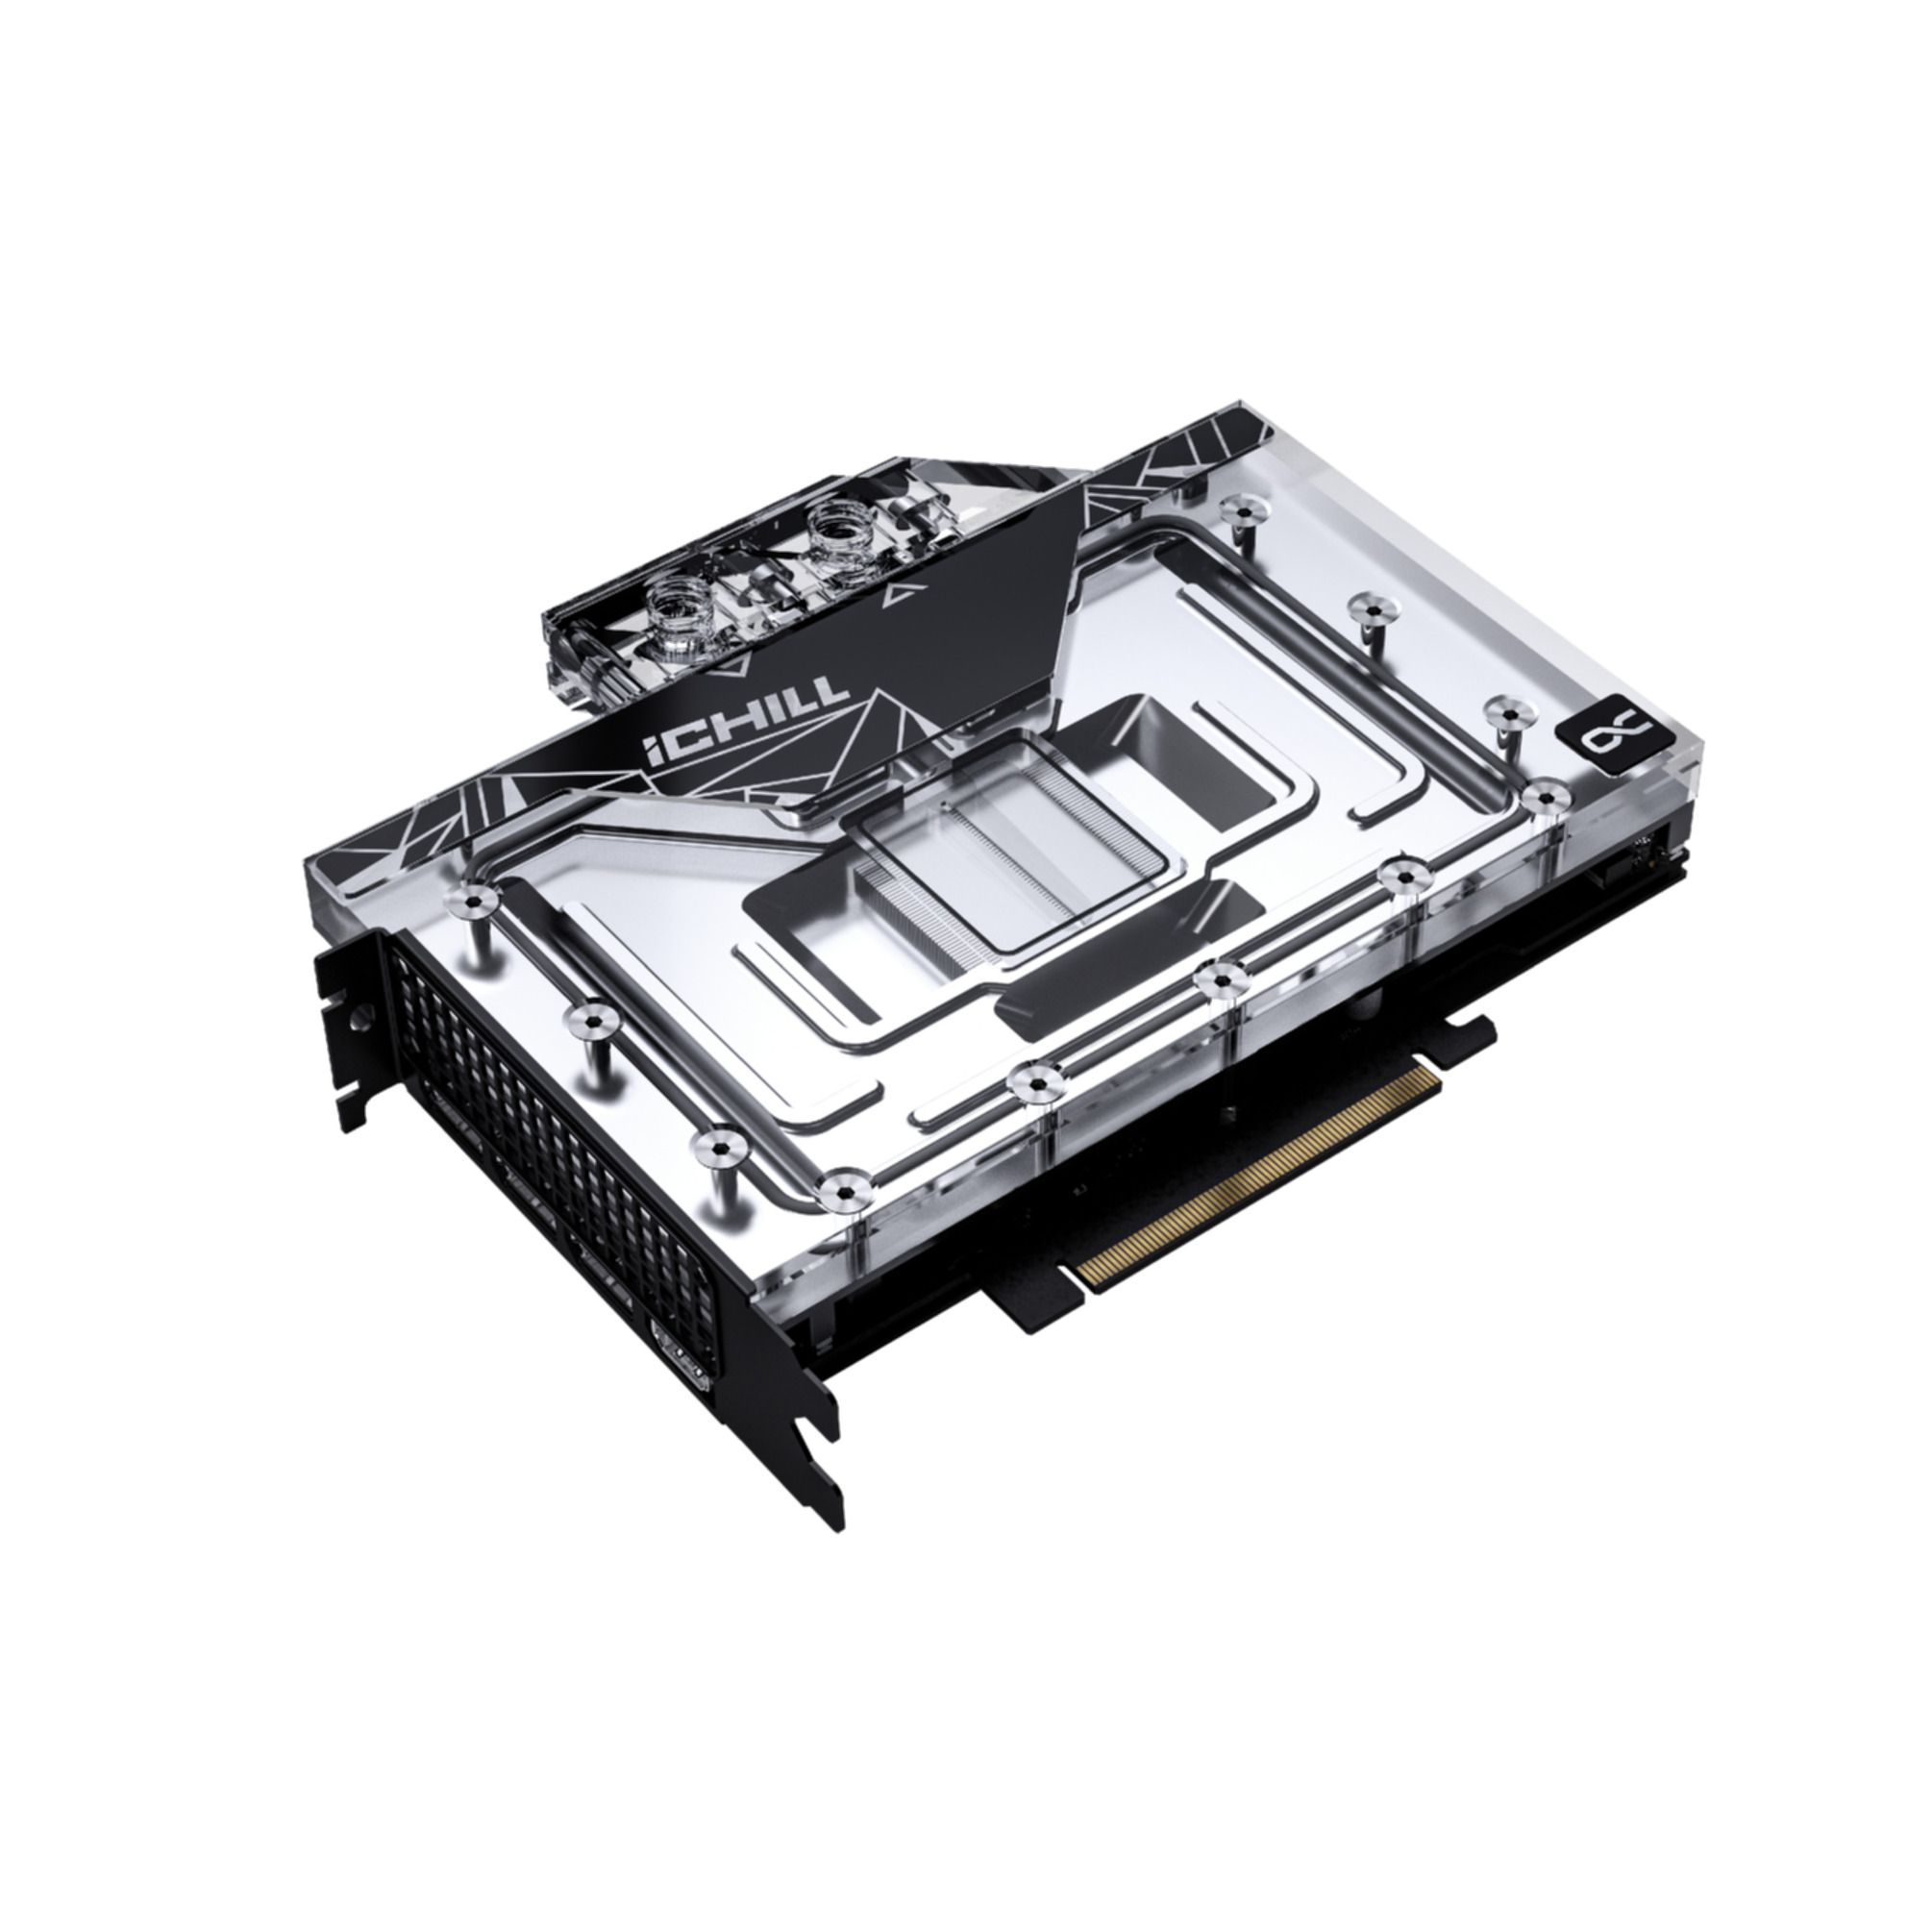 16GB Frostbite - MB GeForce (NVIDIA, 4080 RTX Inno3D Grafikkarte) 16.384 INNO3D iChill